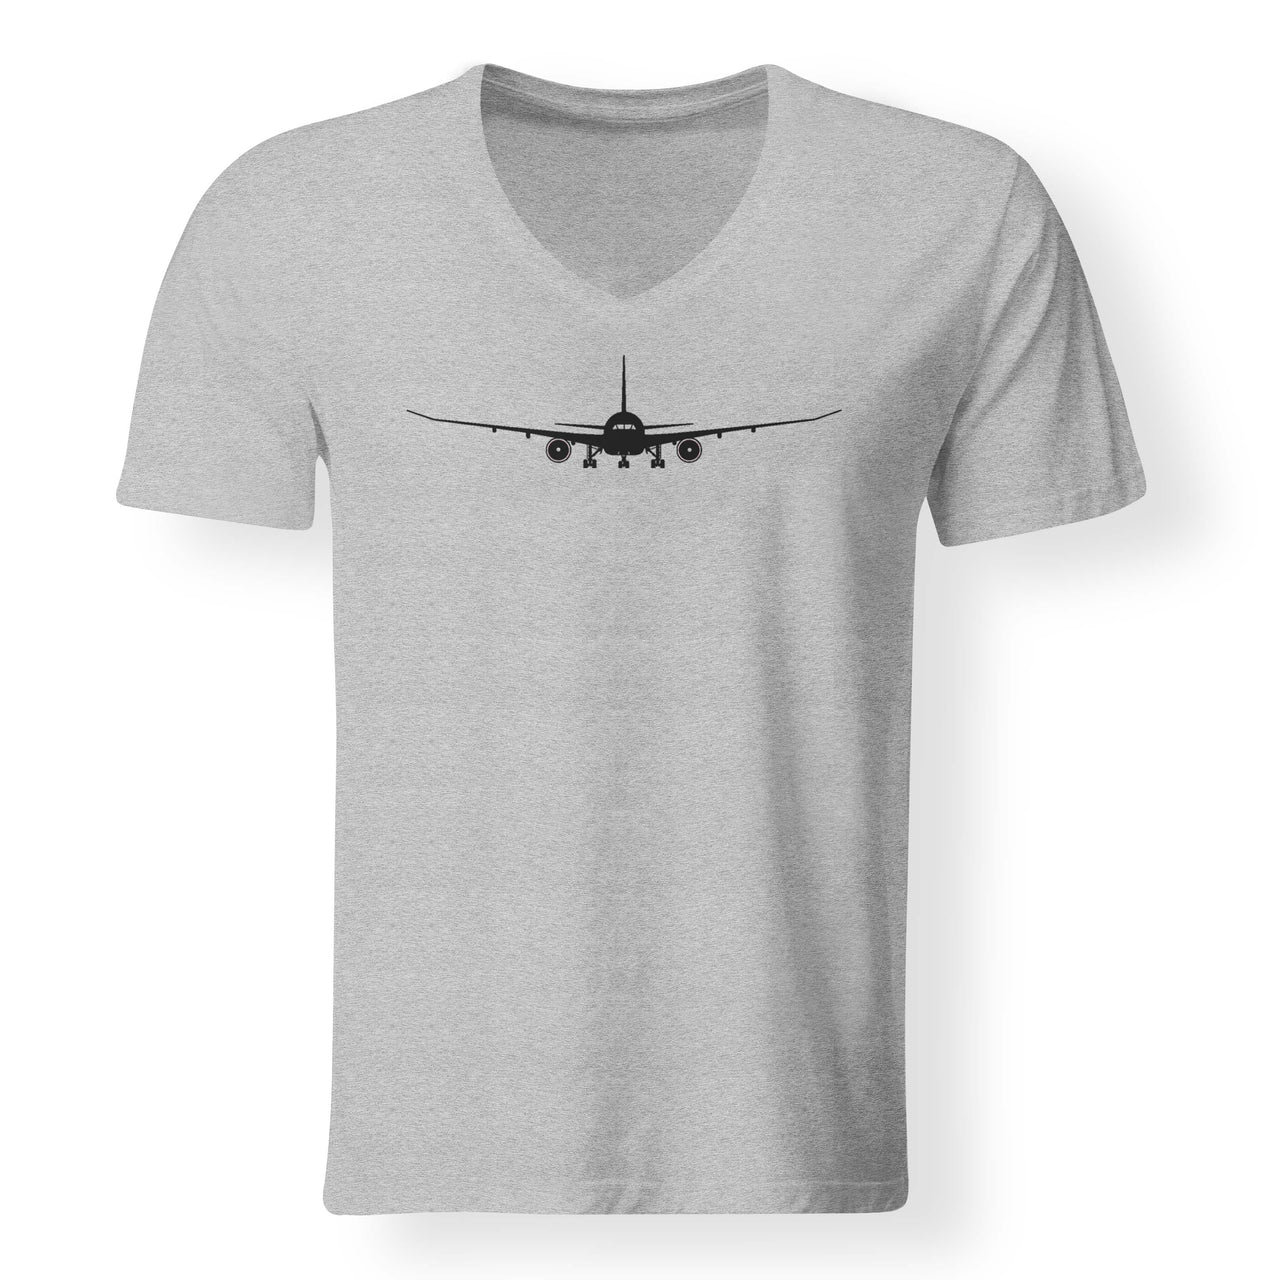 Boeing 787 Silhouette Designed V-Neck T-Shirts